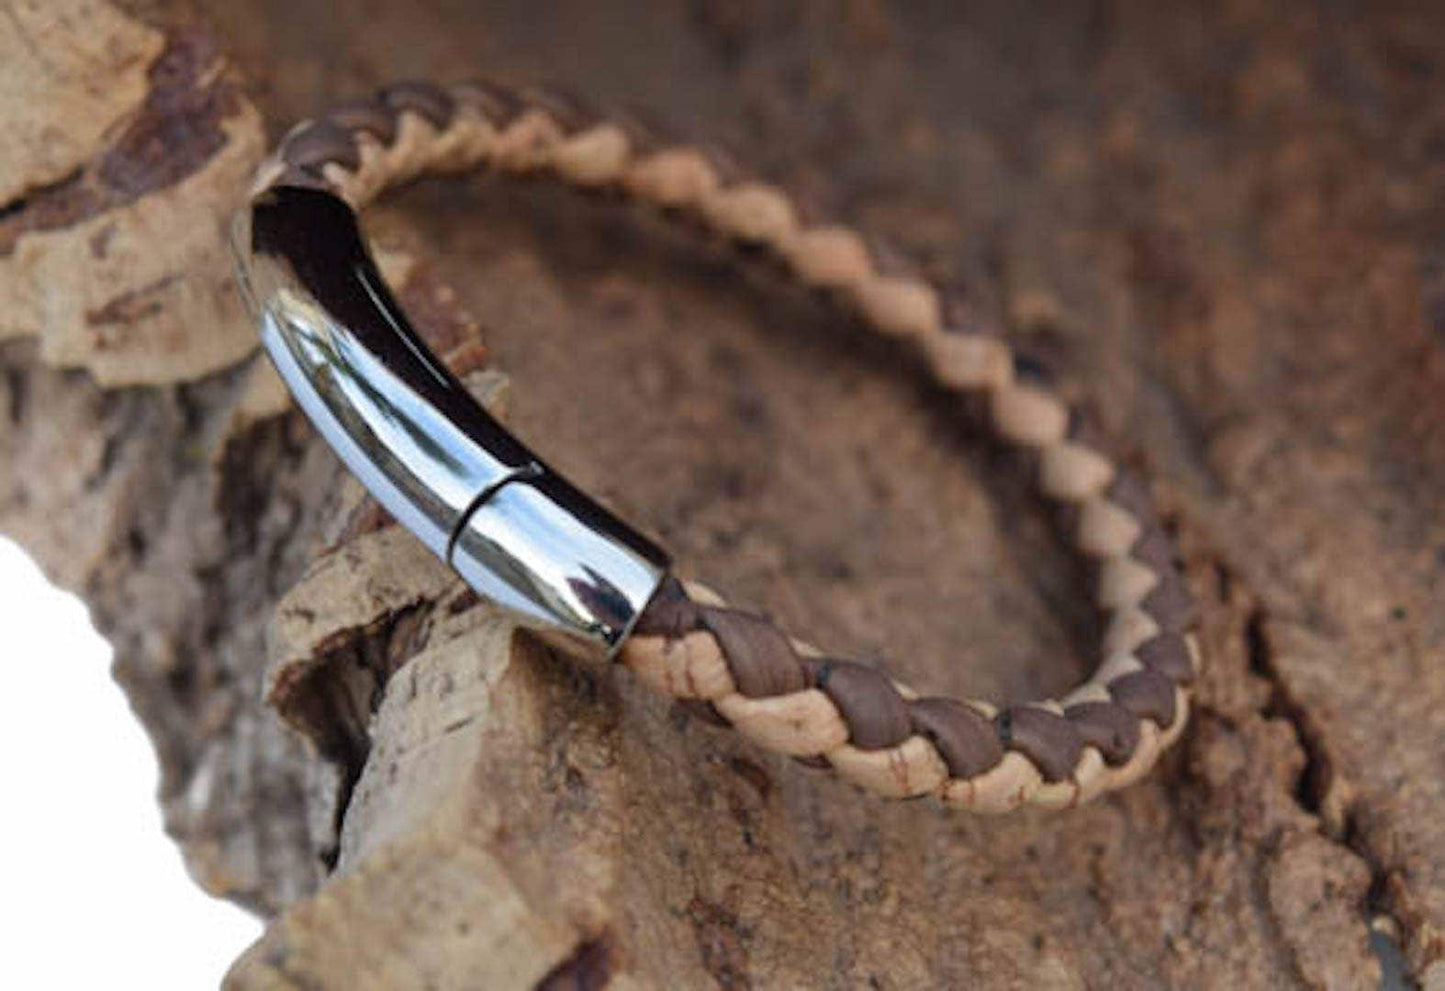 Stainless Steel Weaved Cork Bracelet